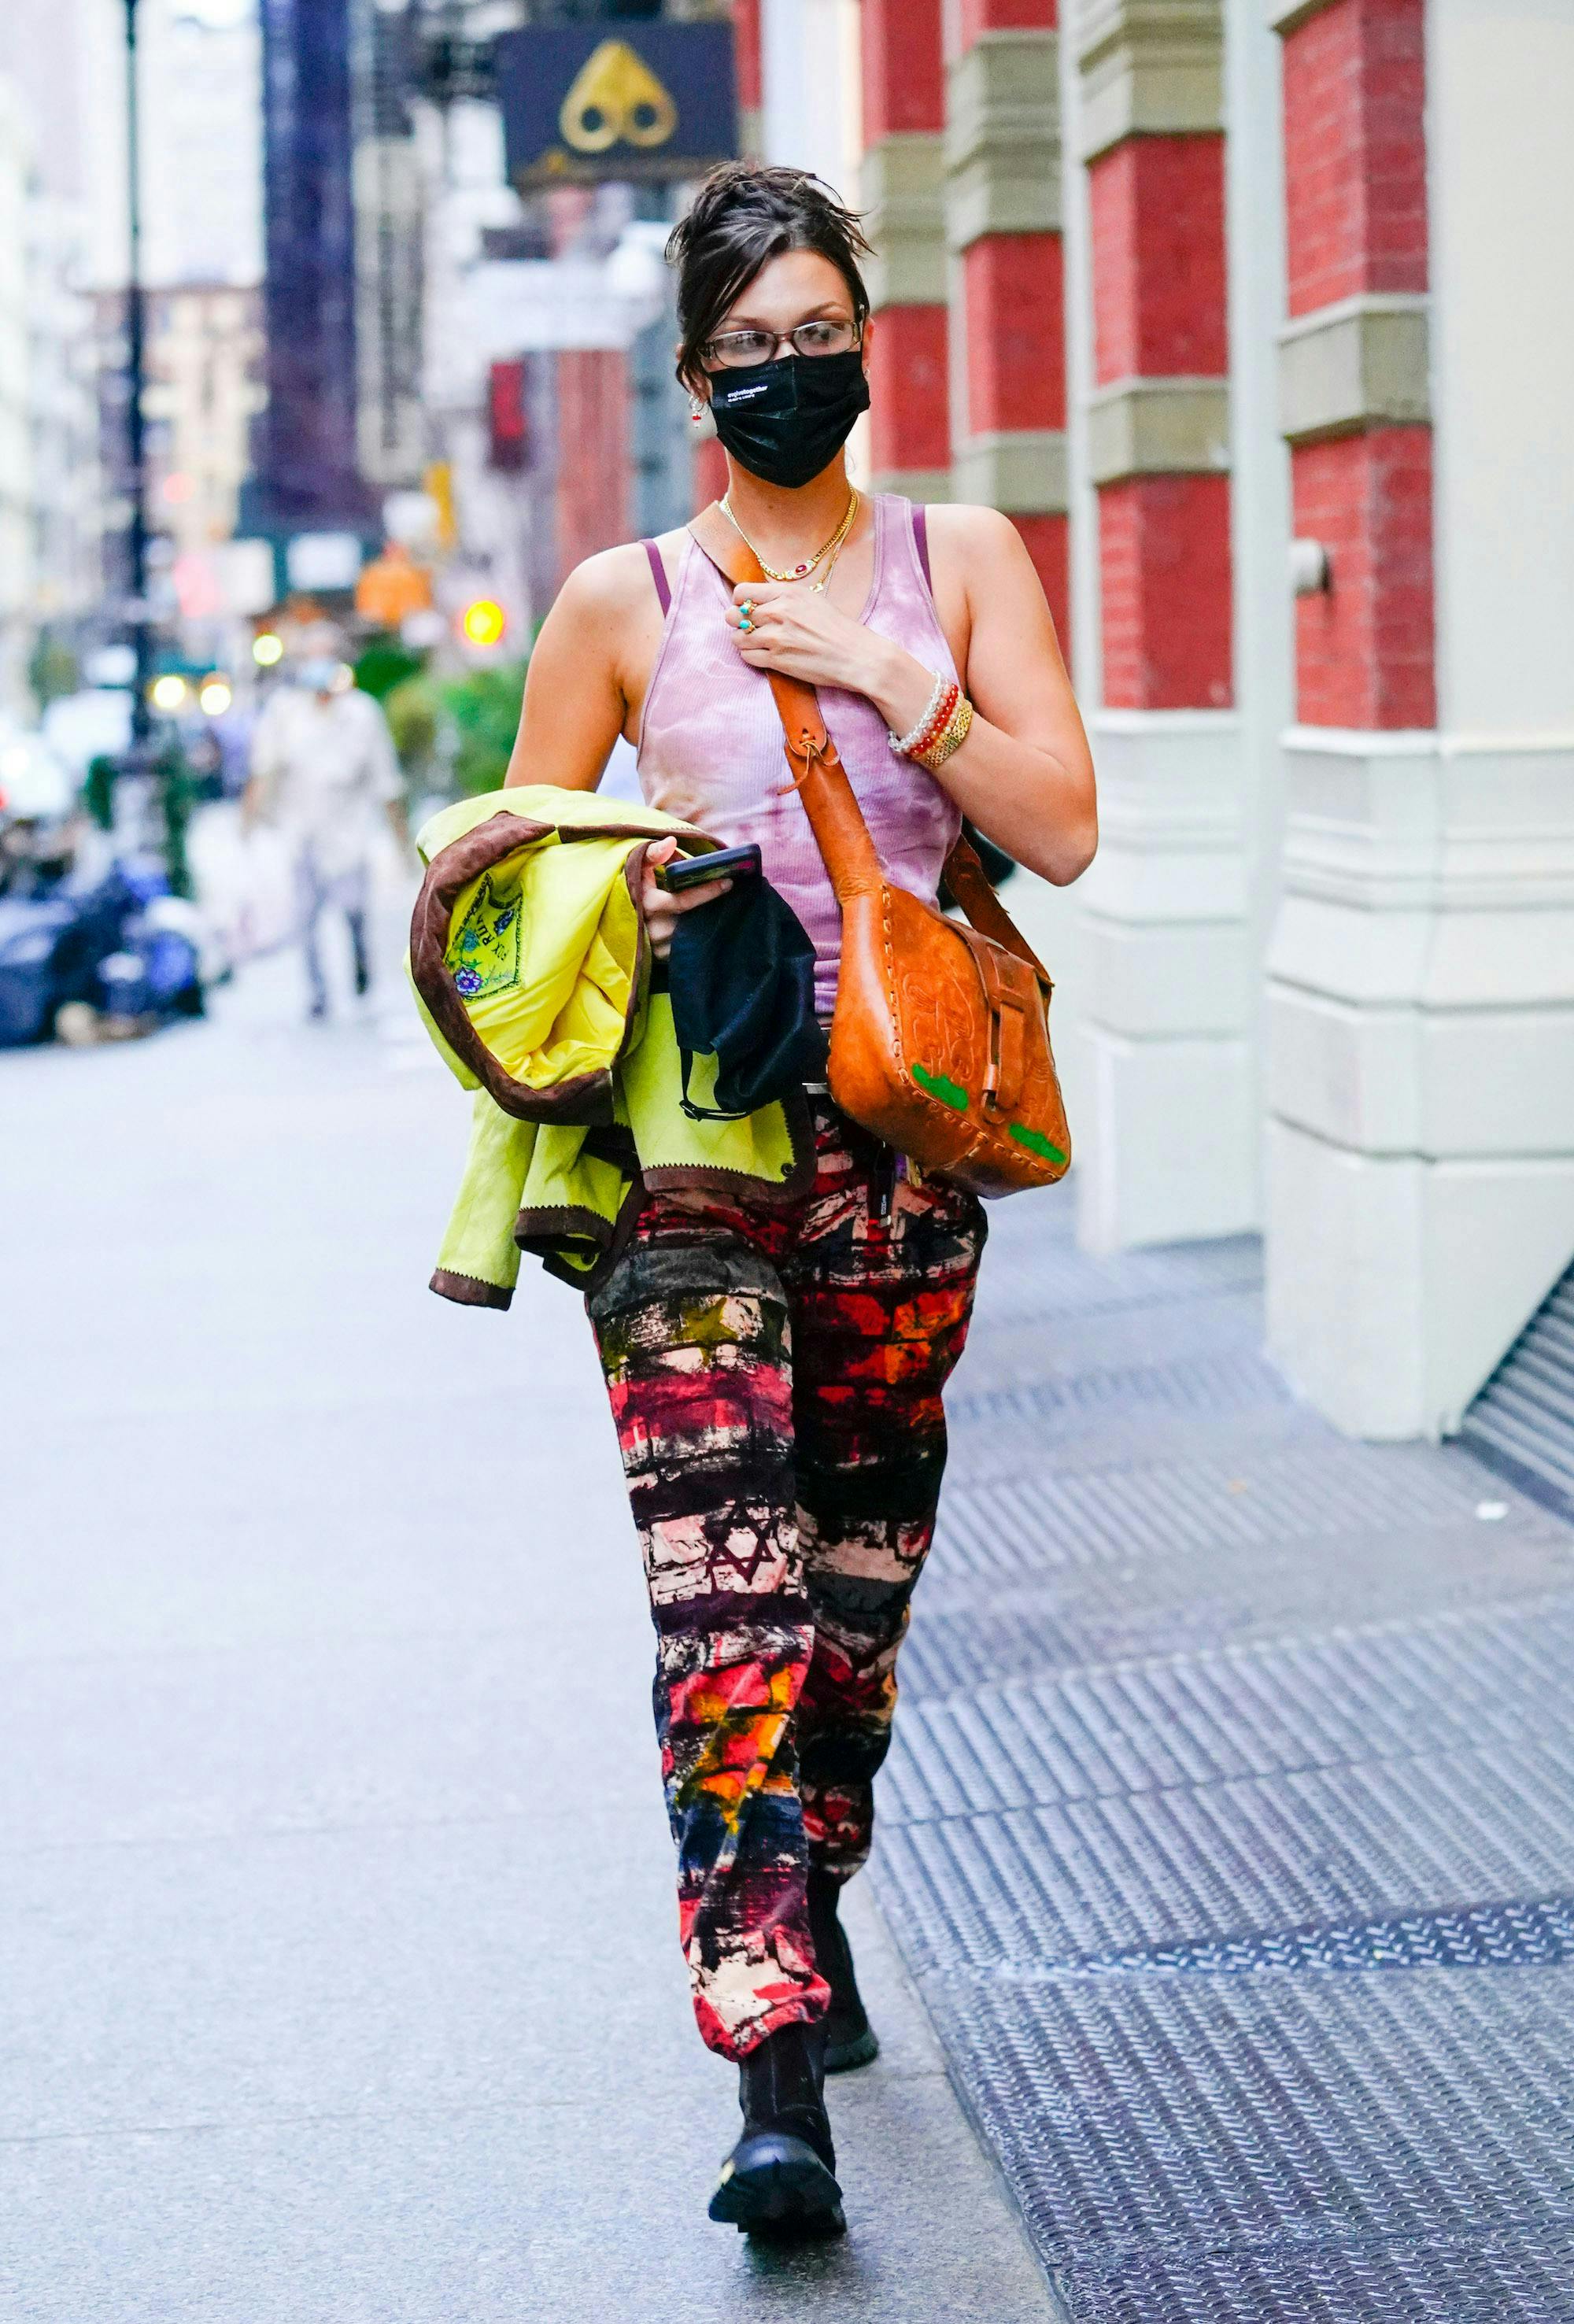 new york handbag bag accessories purse pedestrian person woman adult female pants